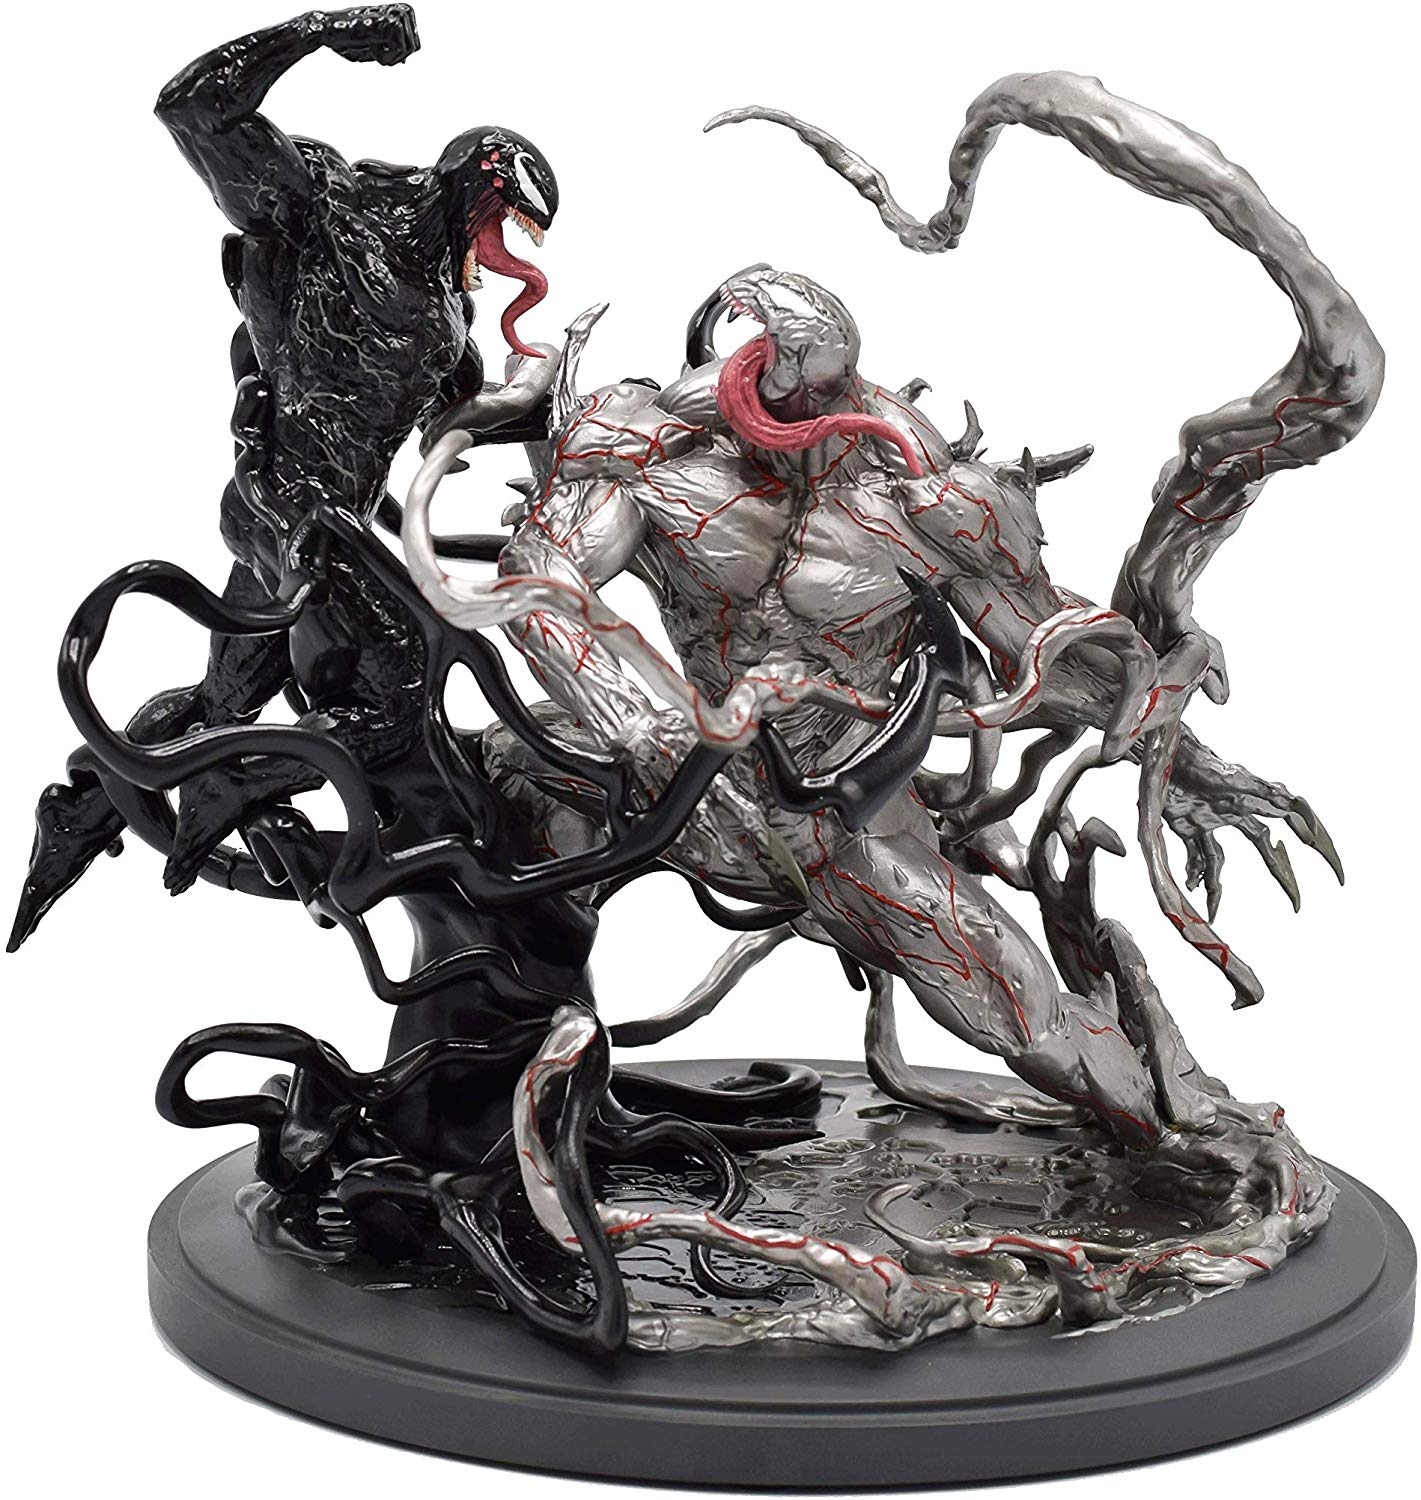 Venom (4K Blu-ray SteelBook + Figurine) [Germany]  Hi-Def Ninja - Pop  Culture - Movie Collectible Community